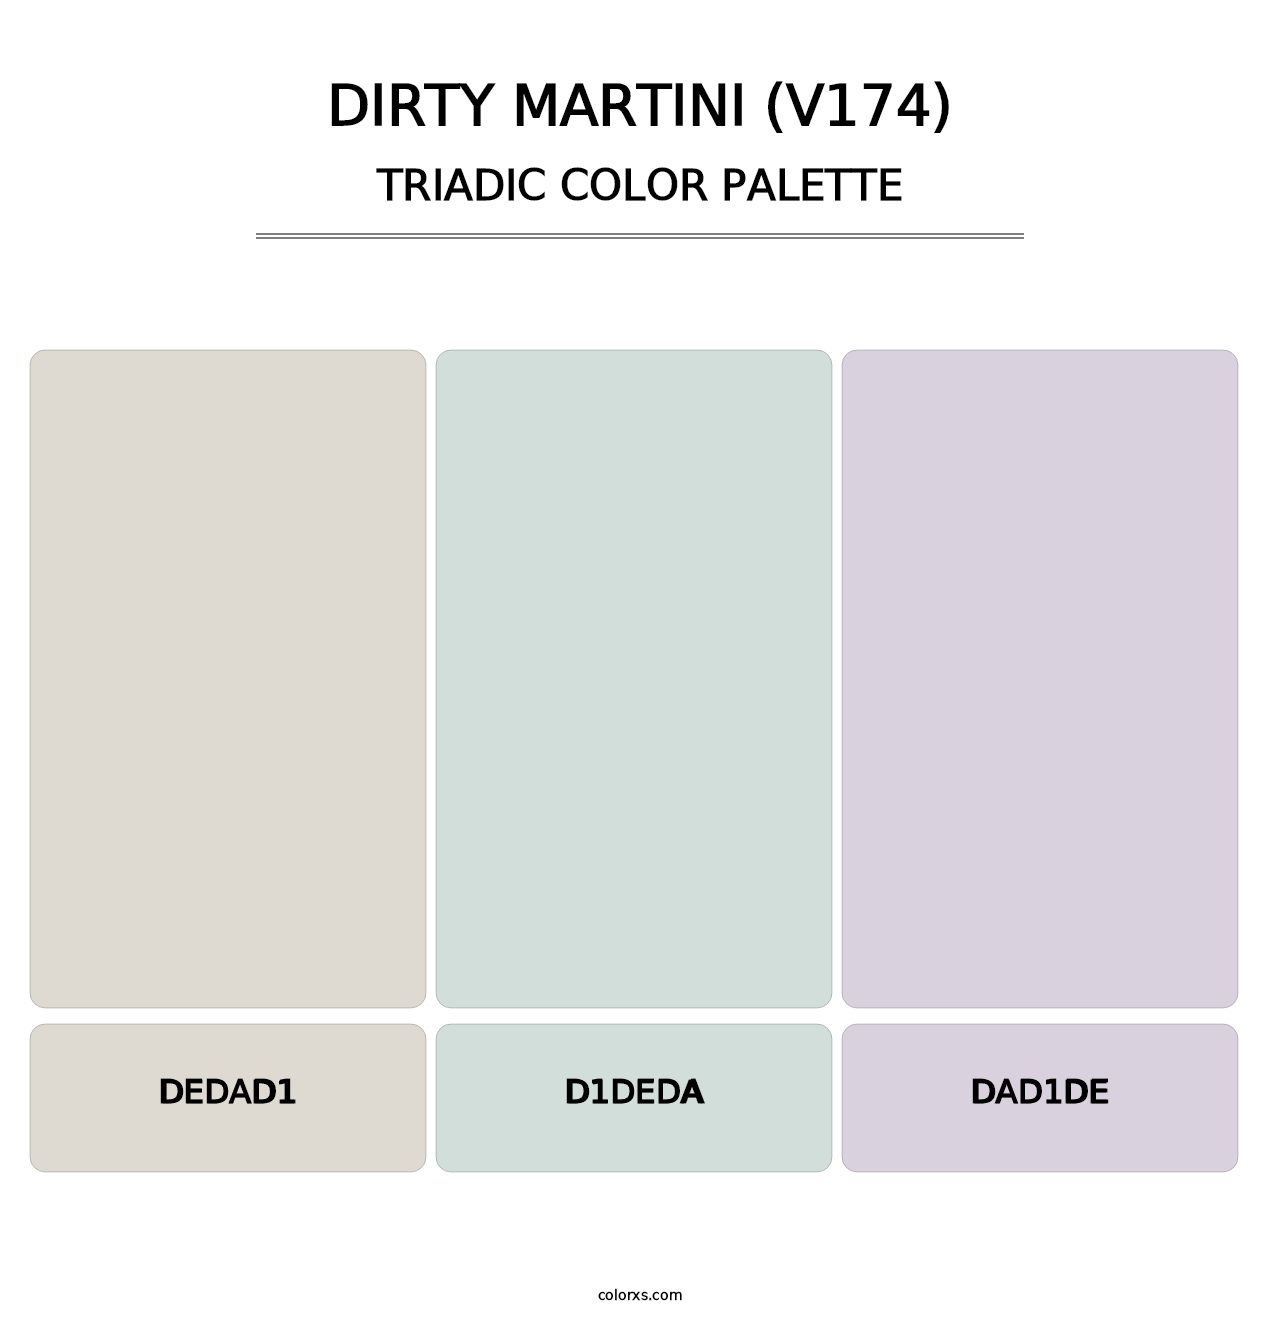 Dirty Martini (V174) - Triadic Color Palette